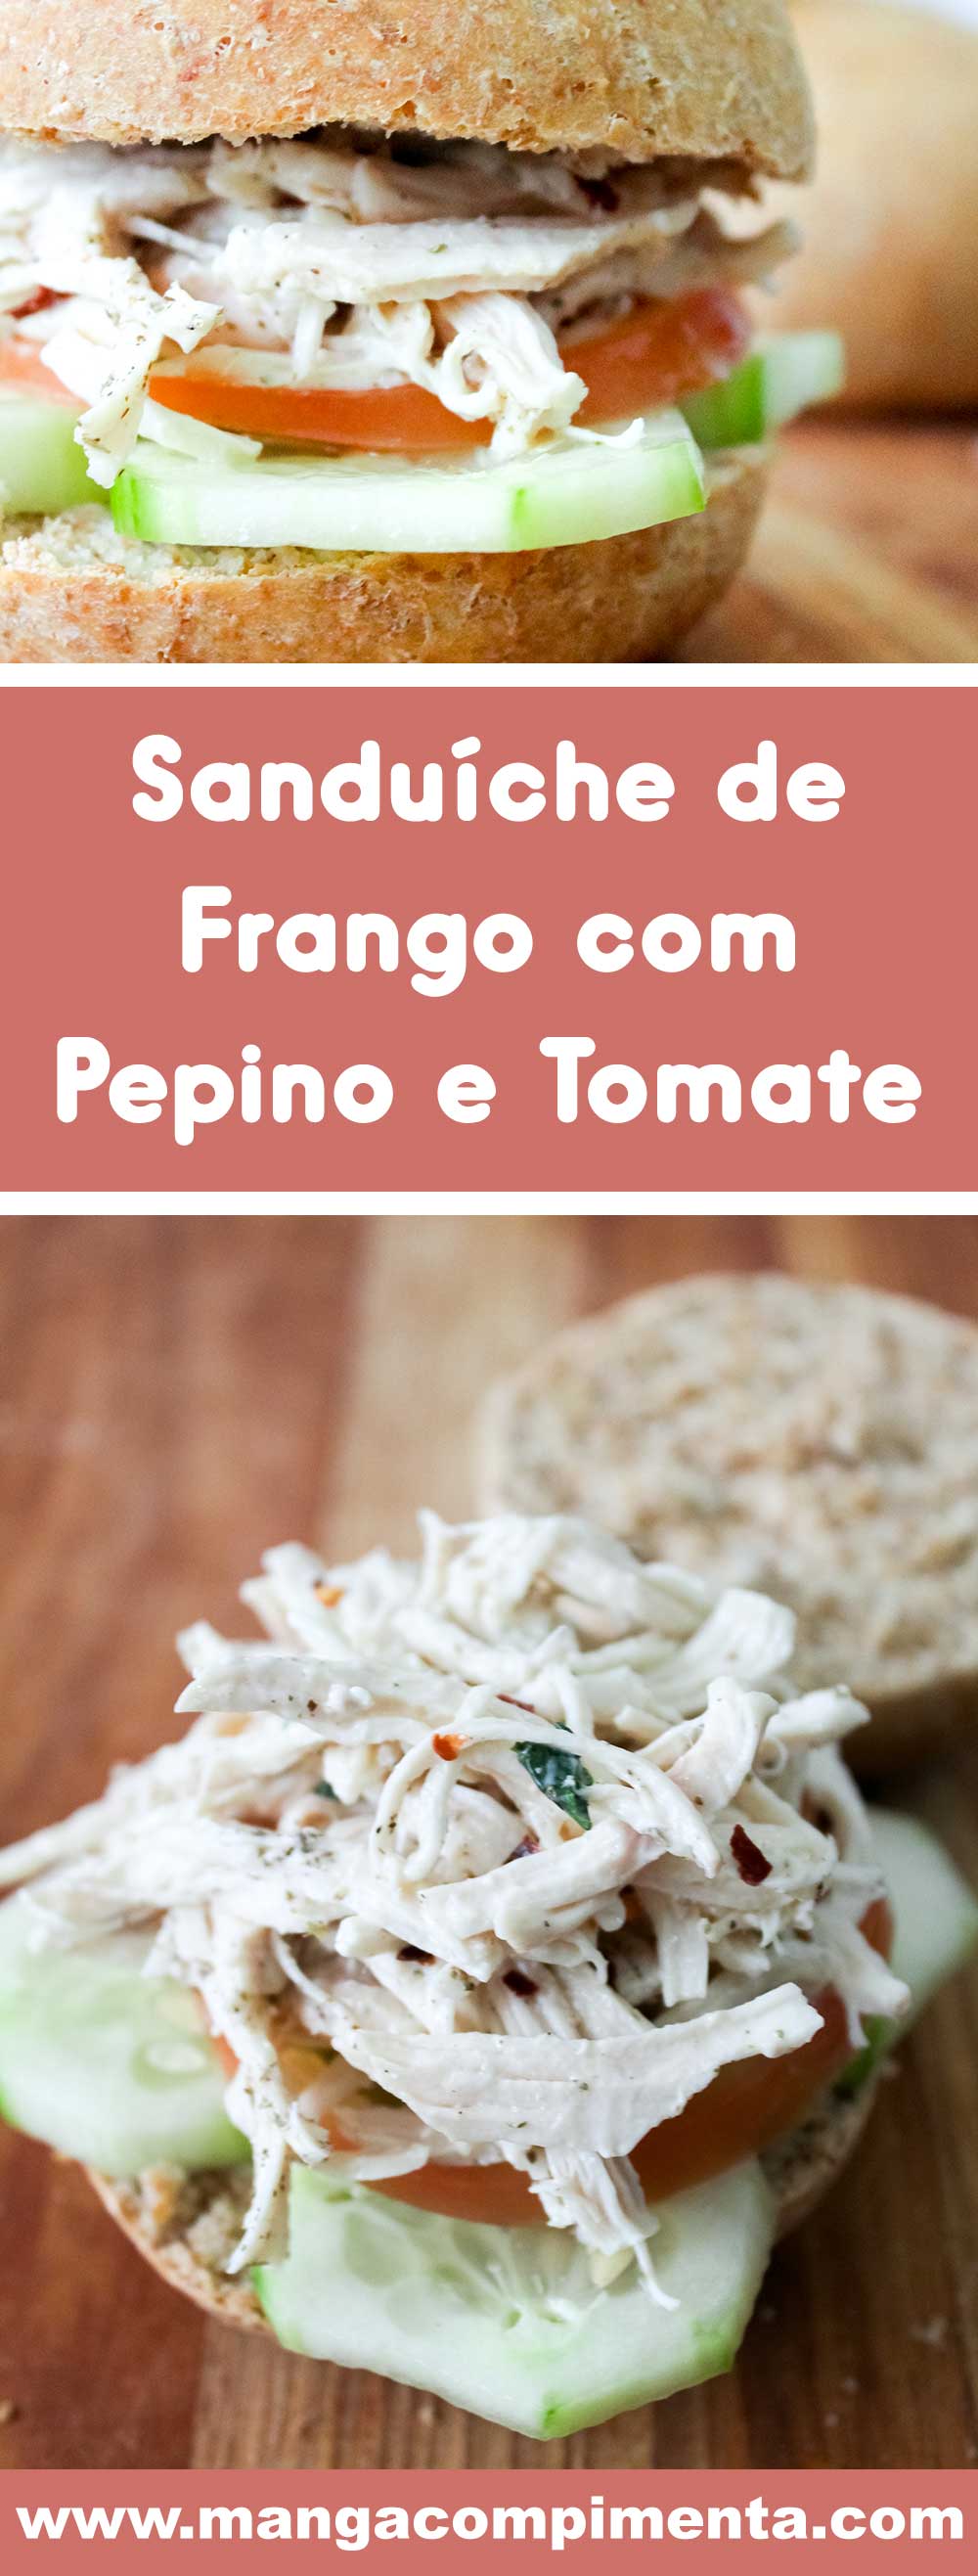 Receita de Sanduíche de Frango com Pepino e Tomate - um lanche natural delicioso para família toda.